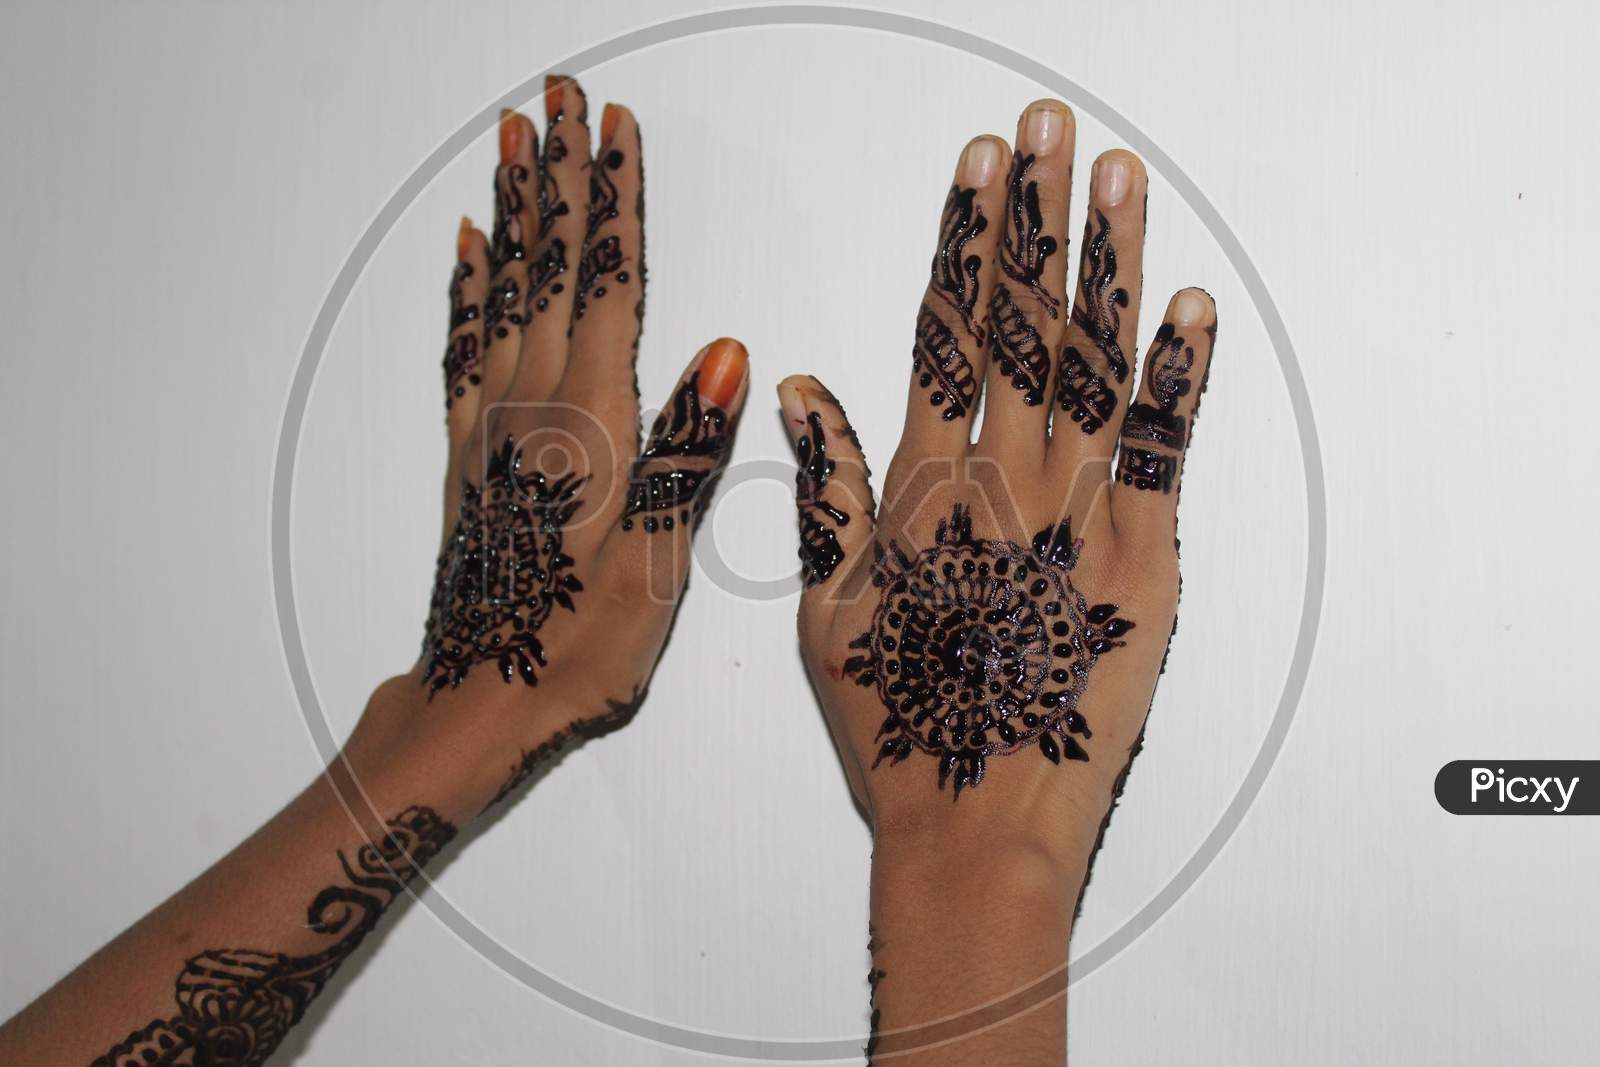 HENNA DESIGNS ON THE HAND